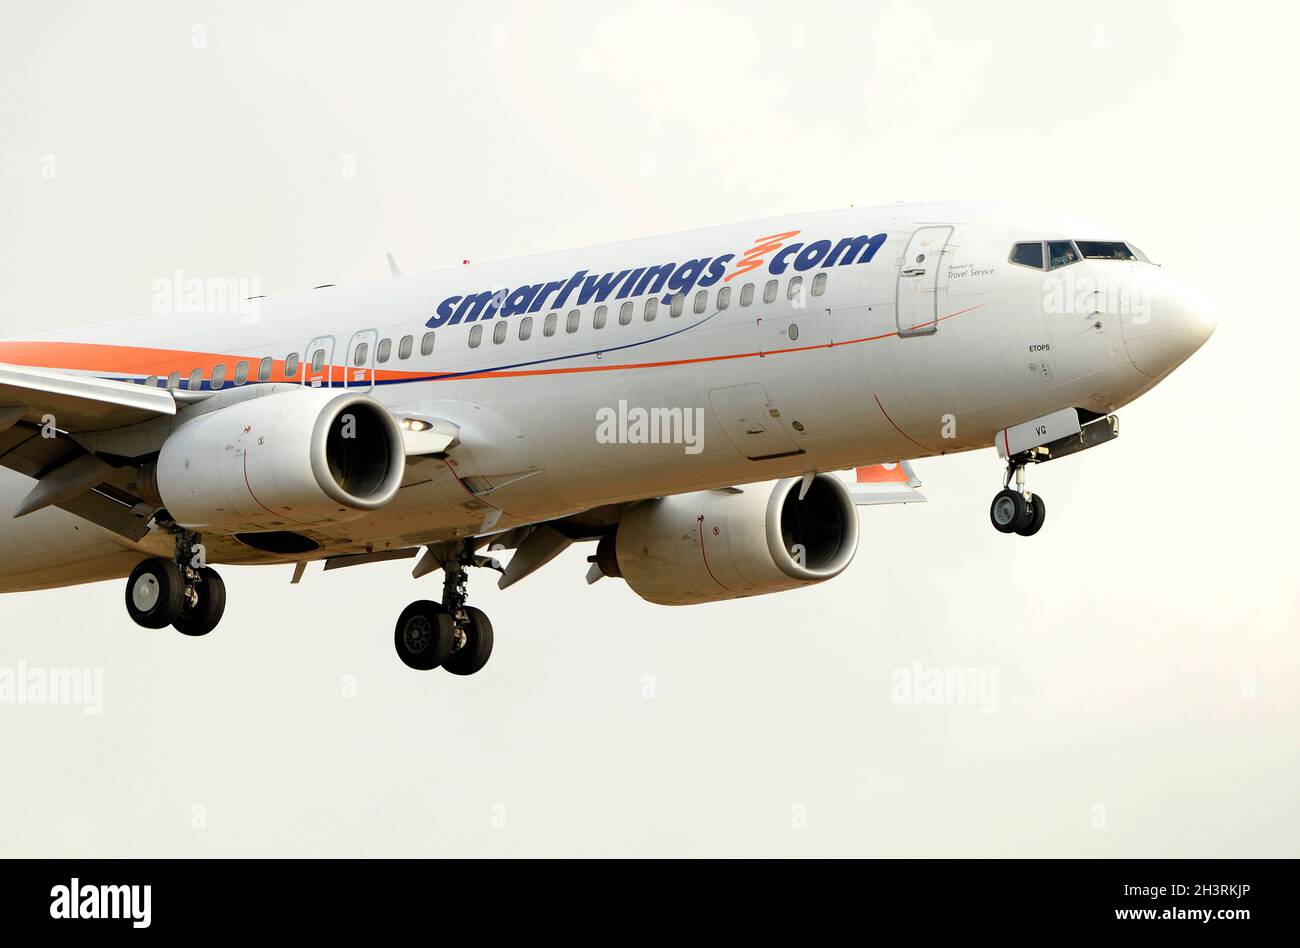 Boeing 737 Flugzeug der Firma Smart Wings, Registrierung OK-TVG, nähert sich Palma de Mallorca Flughafen Stockfoto